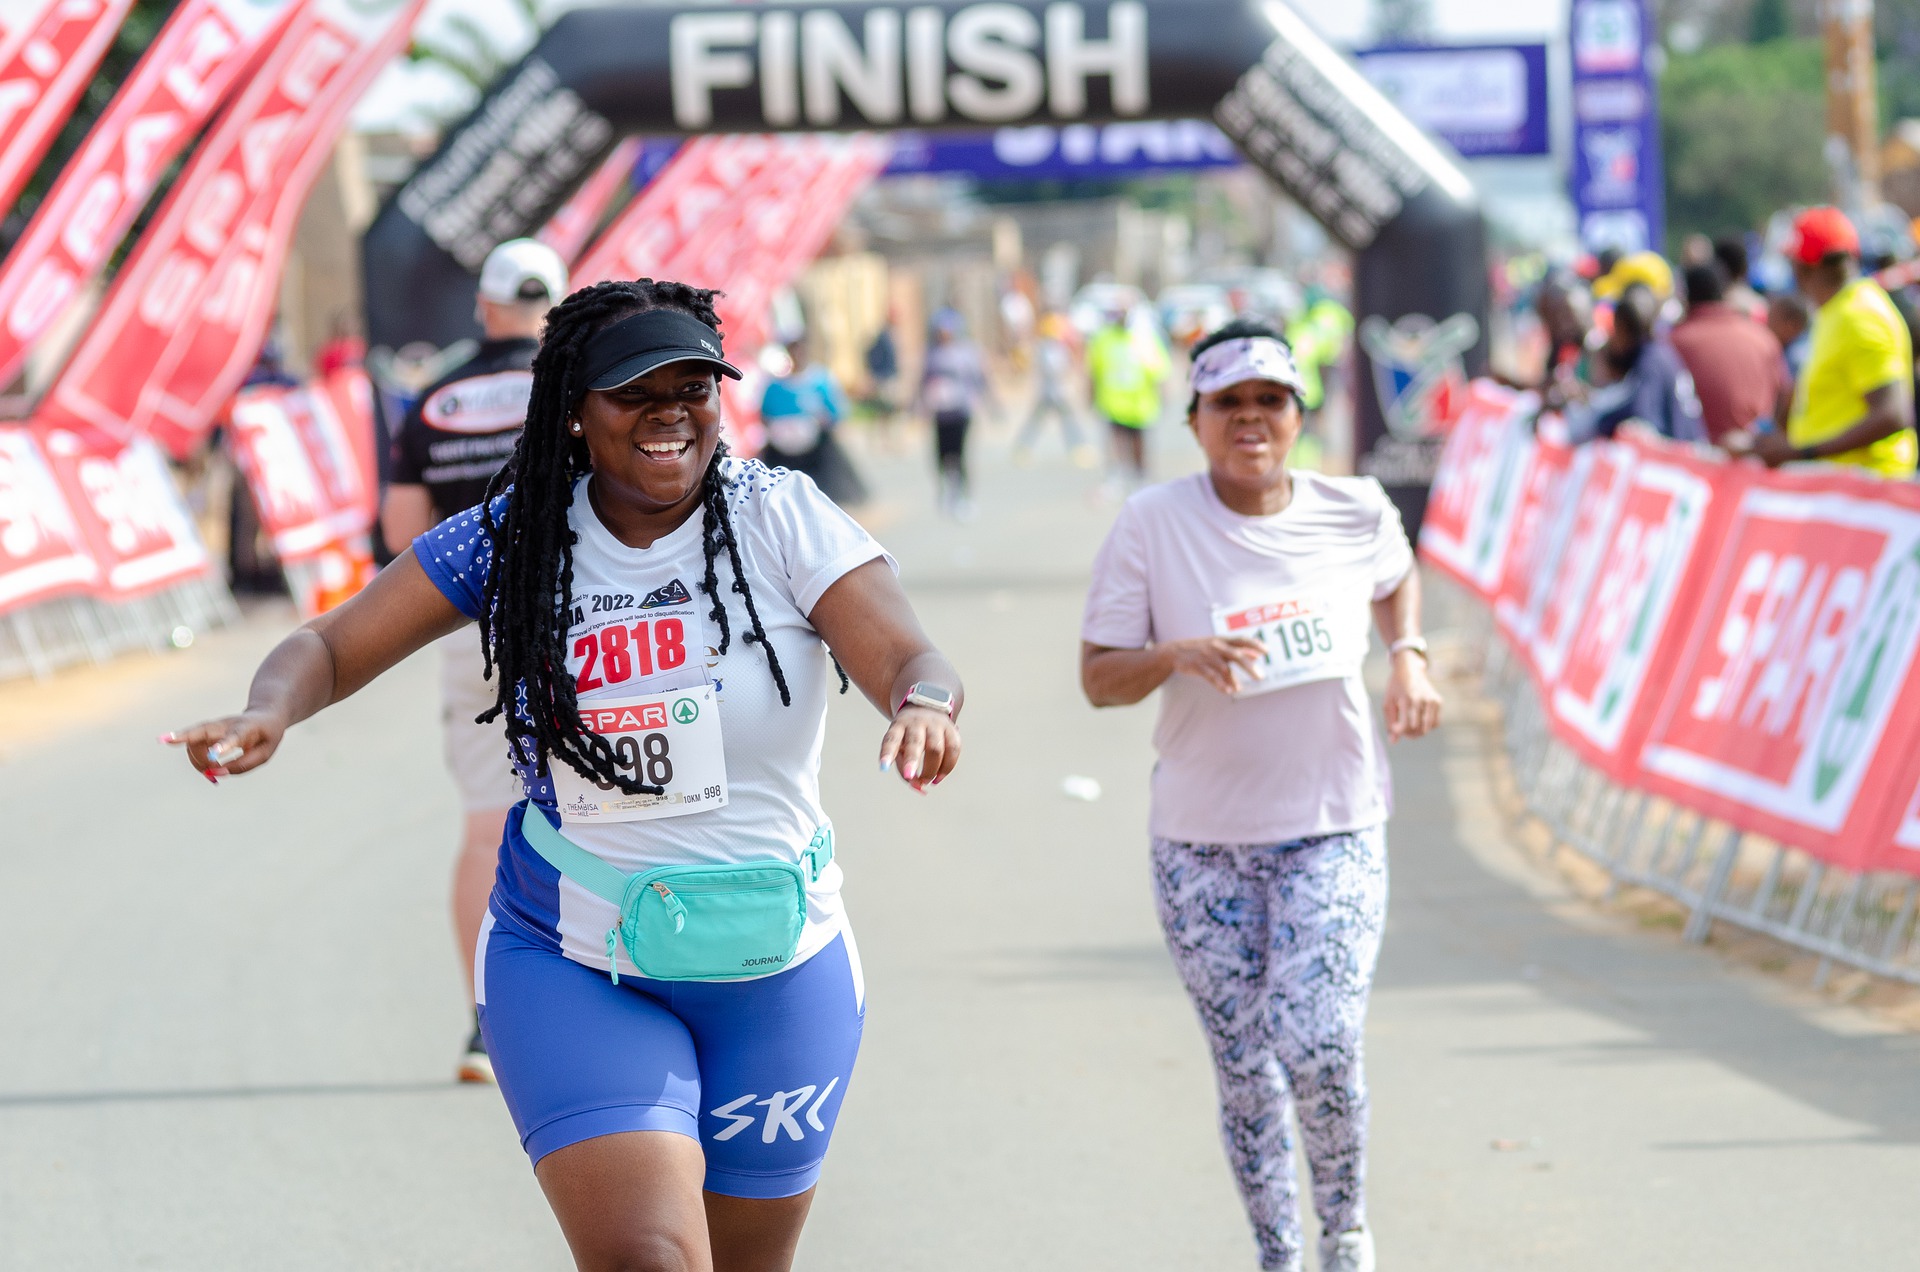 Two women running a marathon.